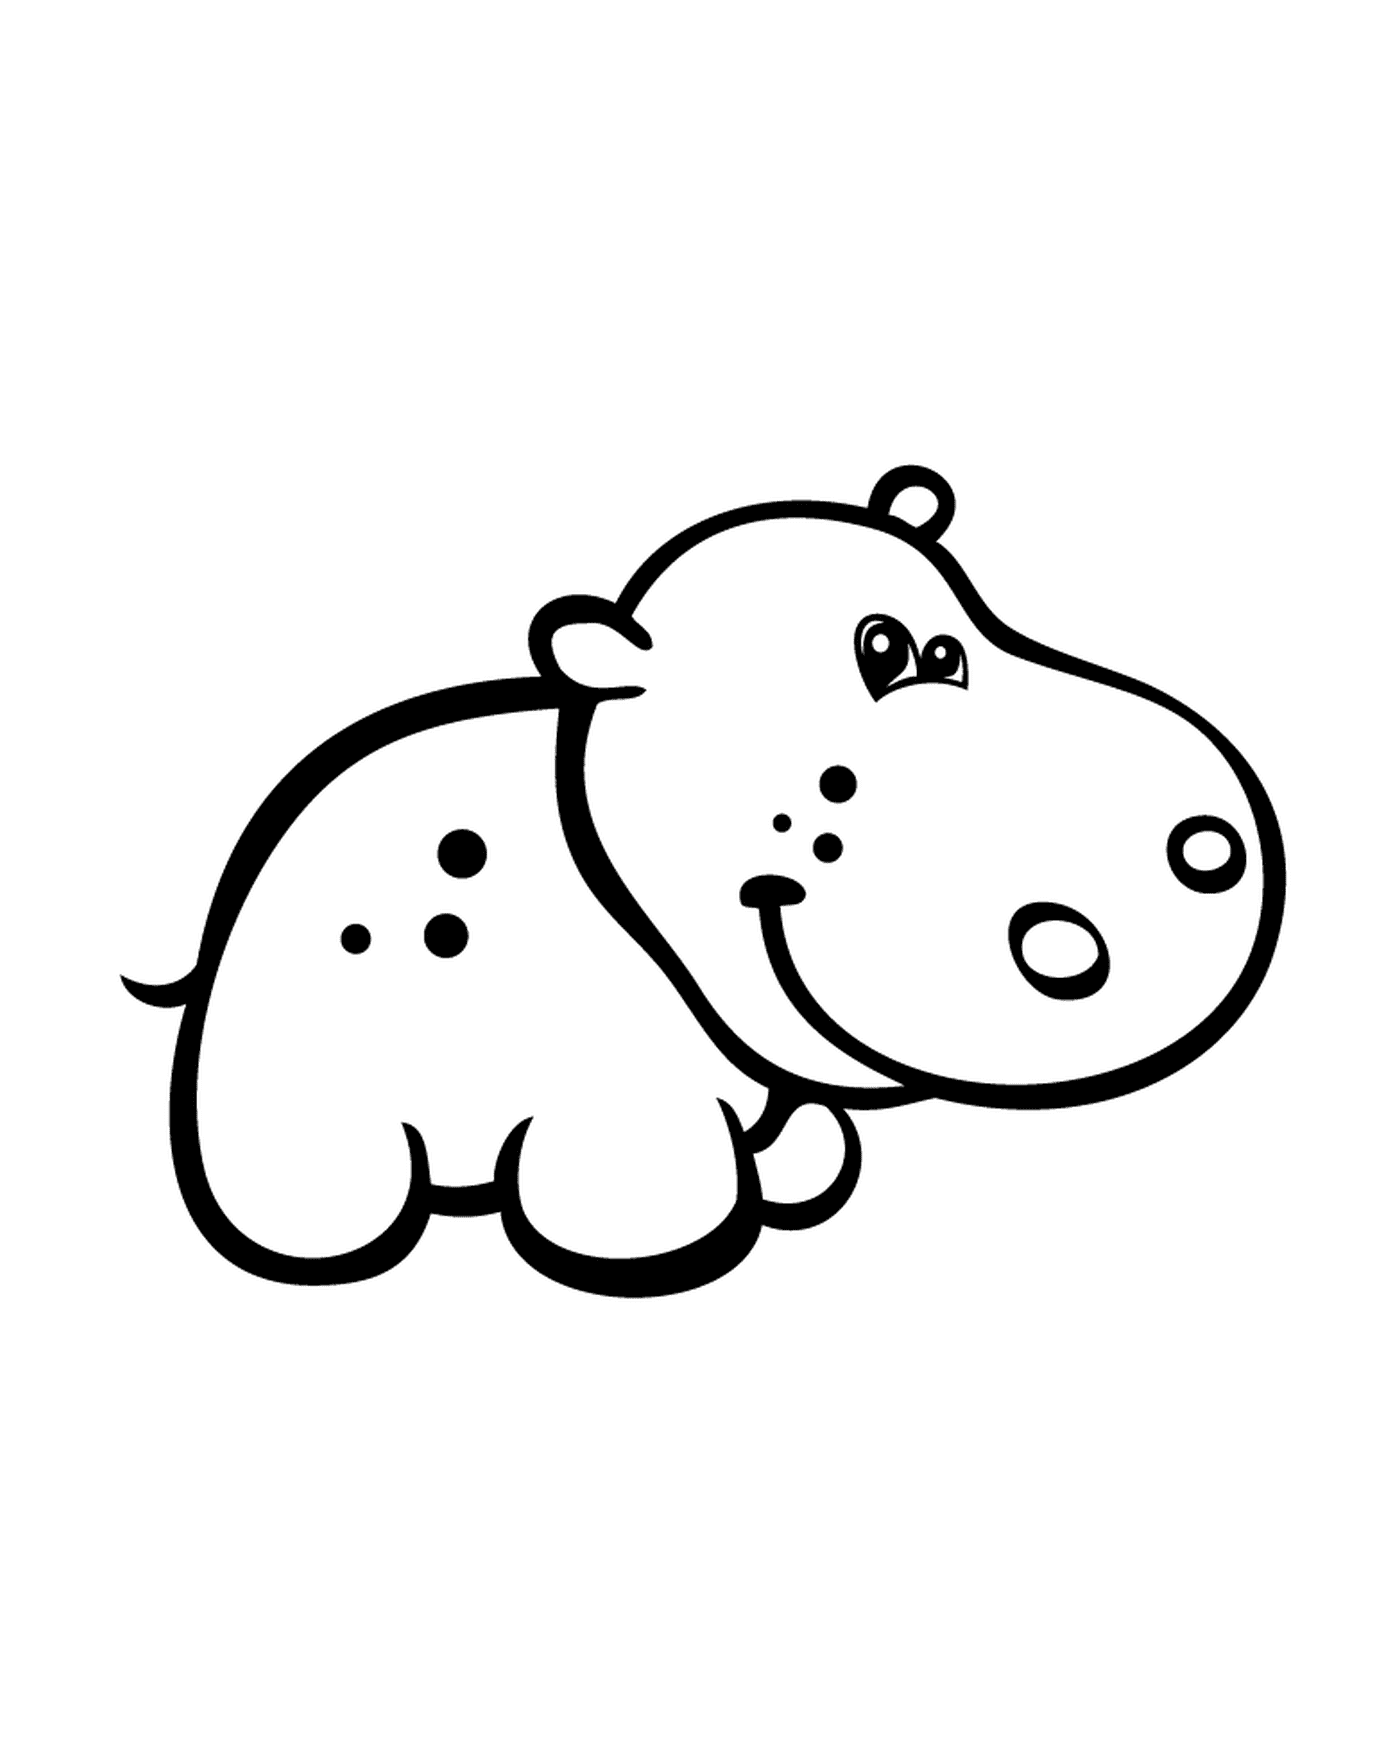  Another representation of a hippopotamus 